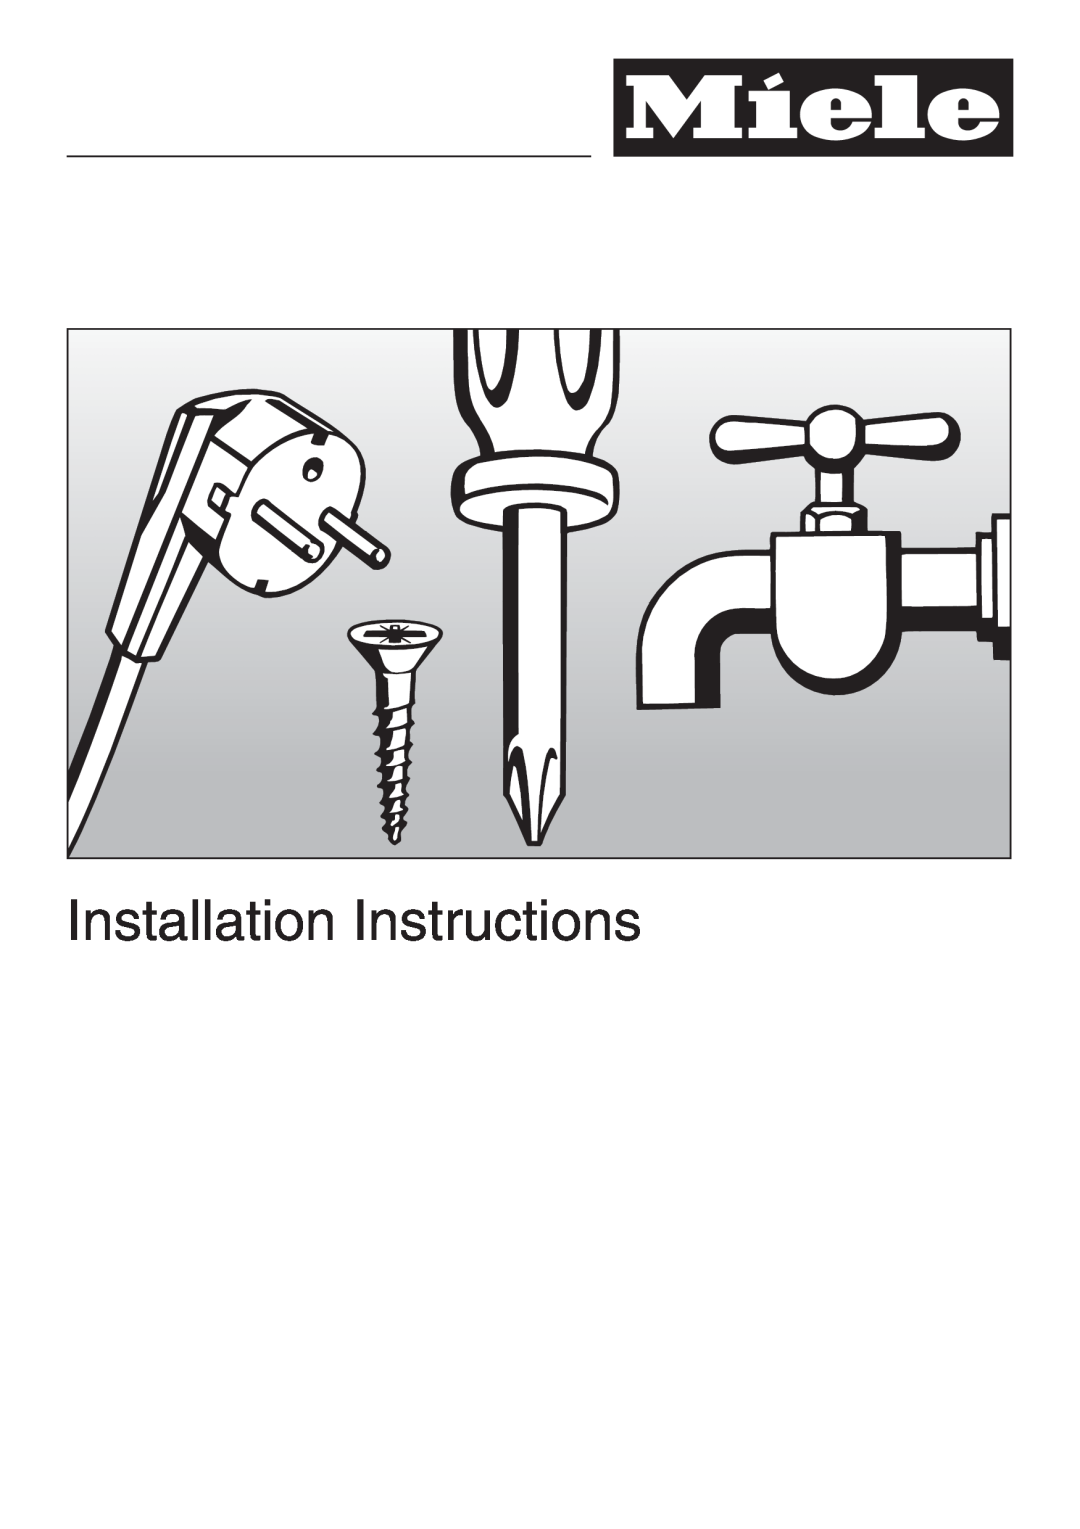 Miele DA251-4, DA259-4, DA252-4 installation instructions Installation Instructions 